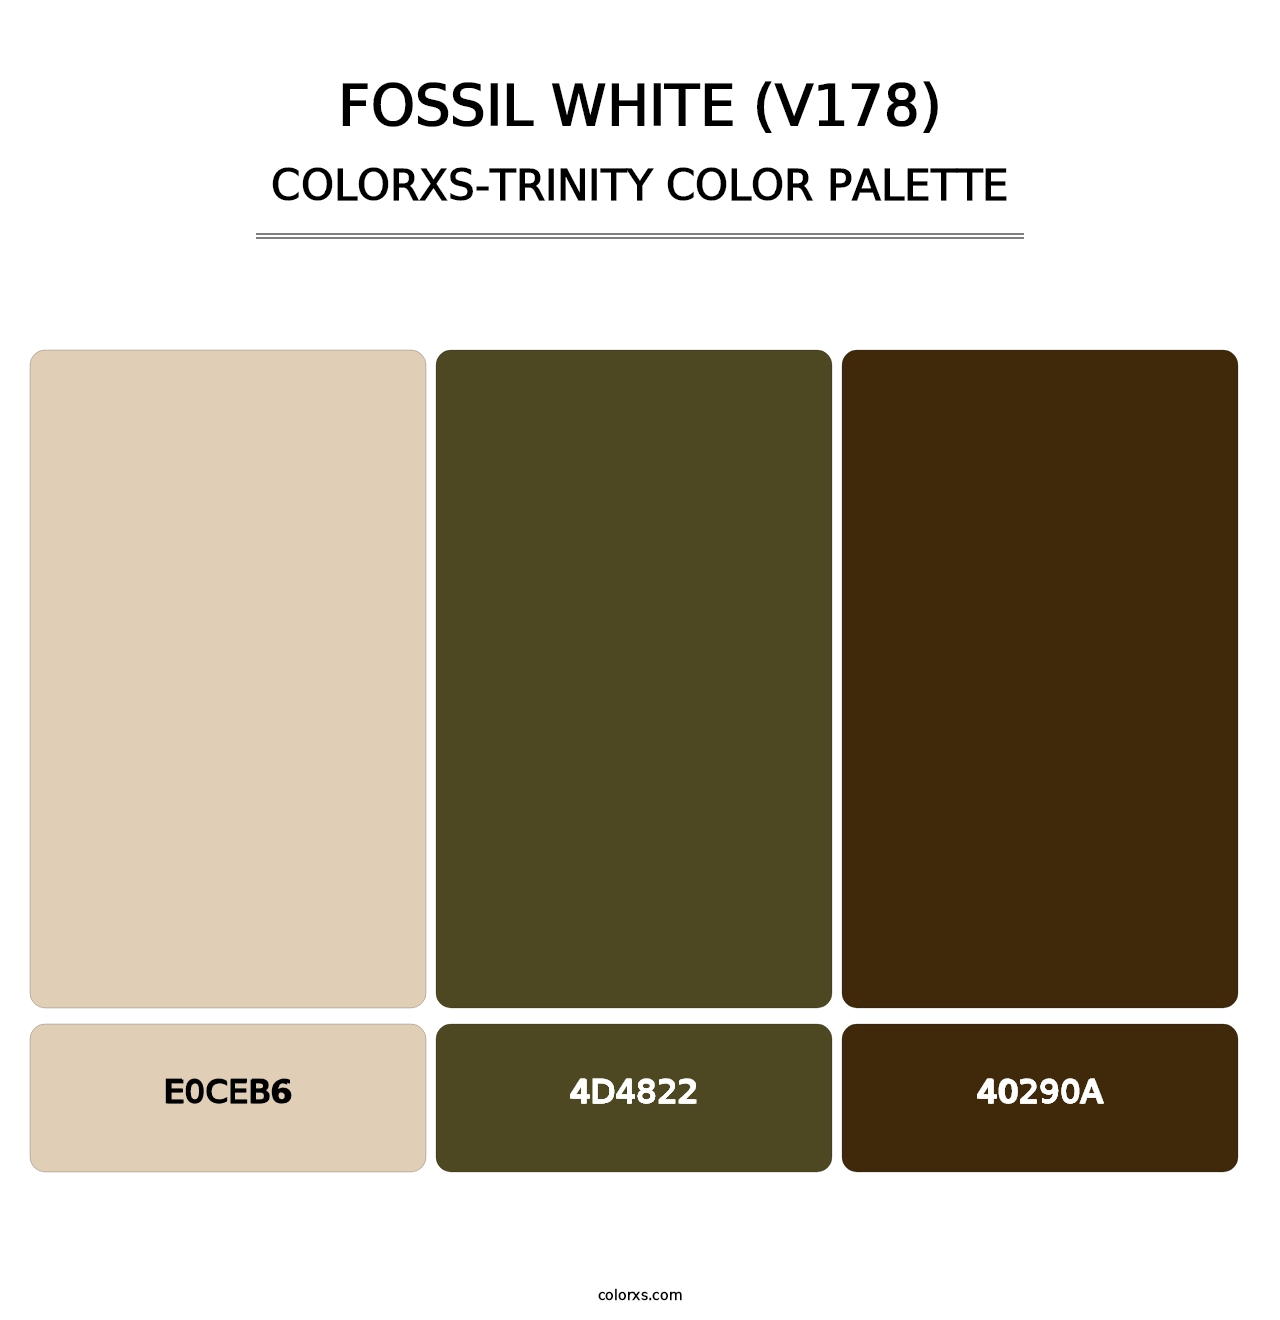 Fossil White (V178) - Colorxs Trinity Palette